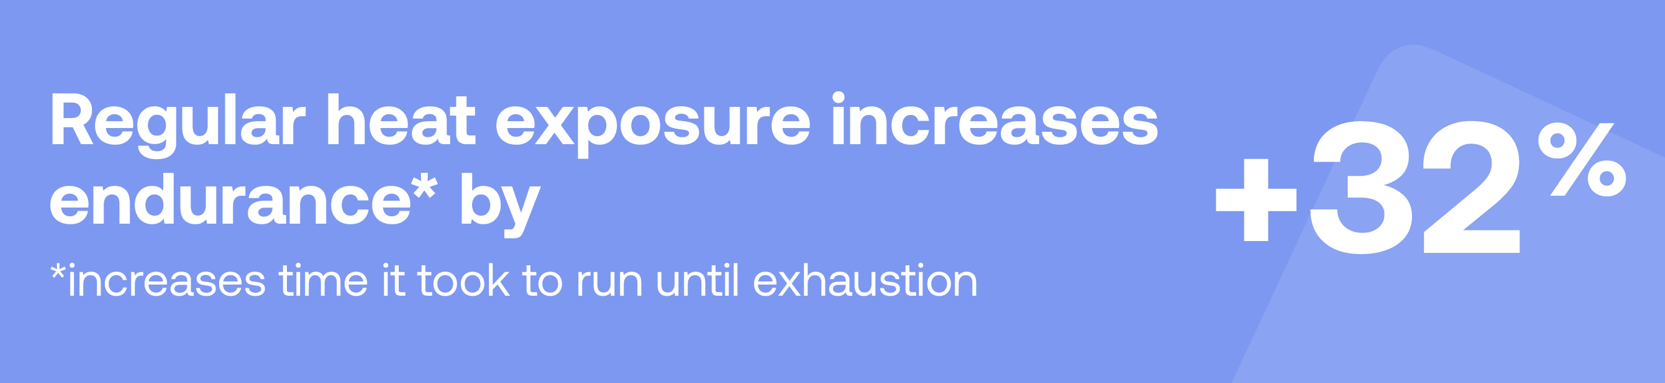 Regular heat exposure increases endurance* by +32%